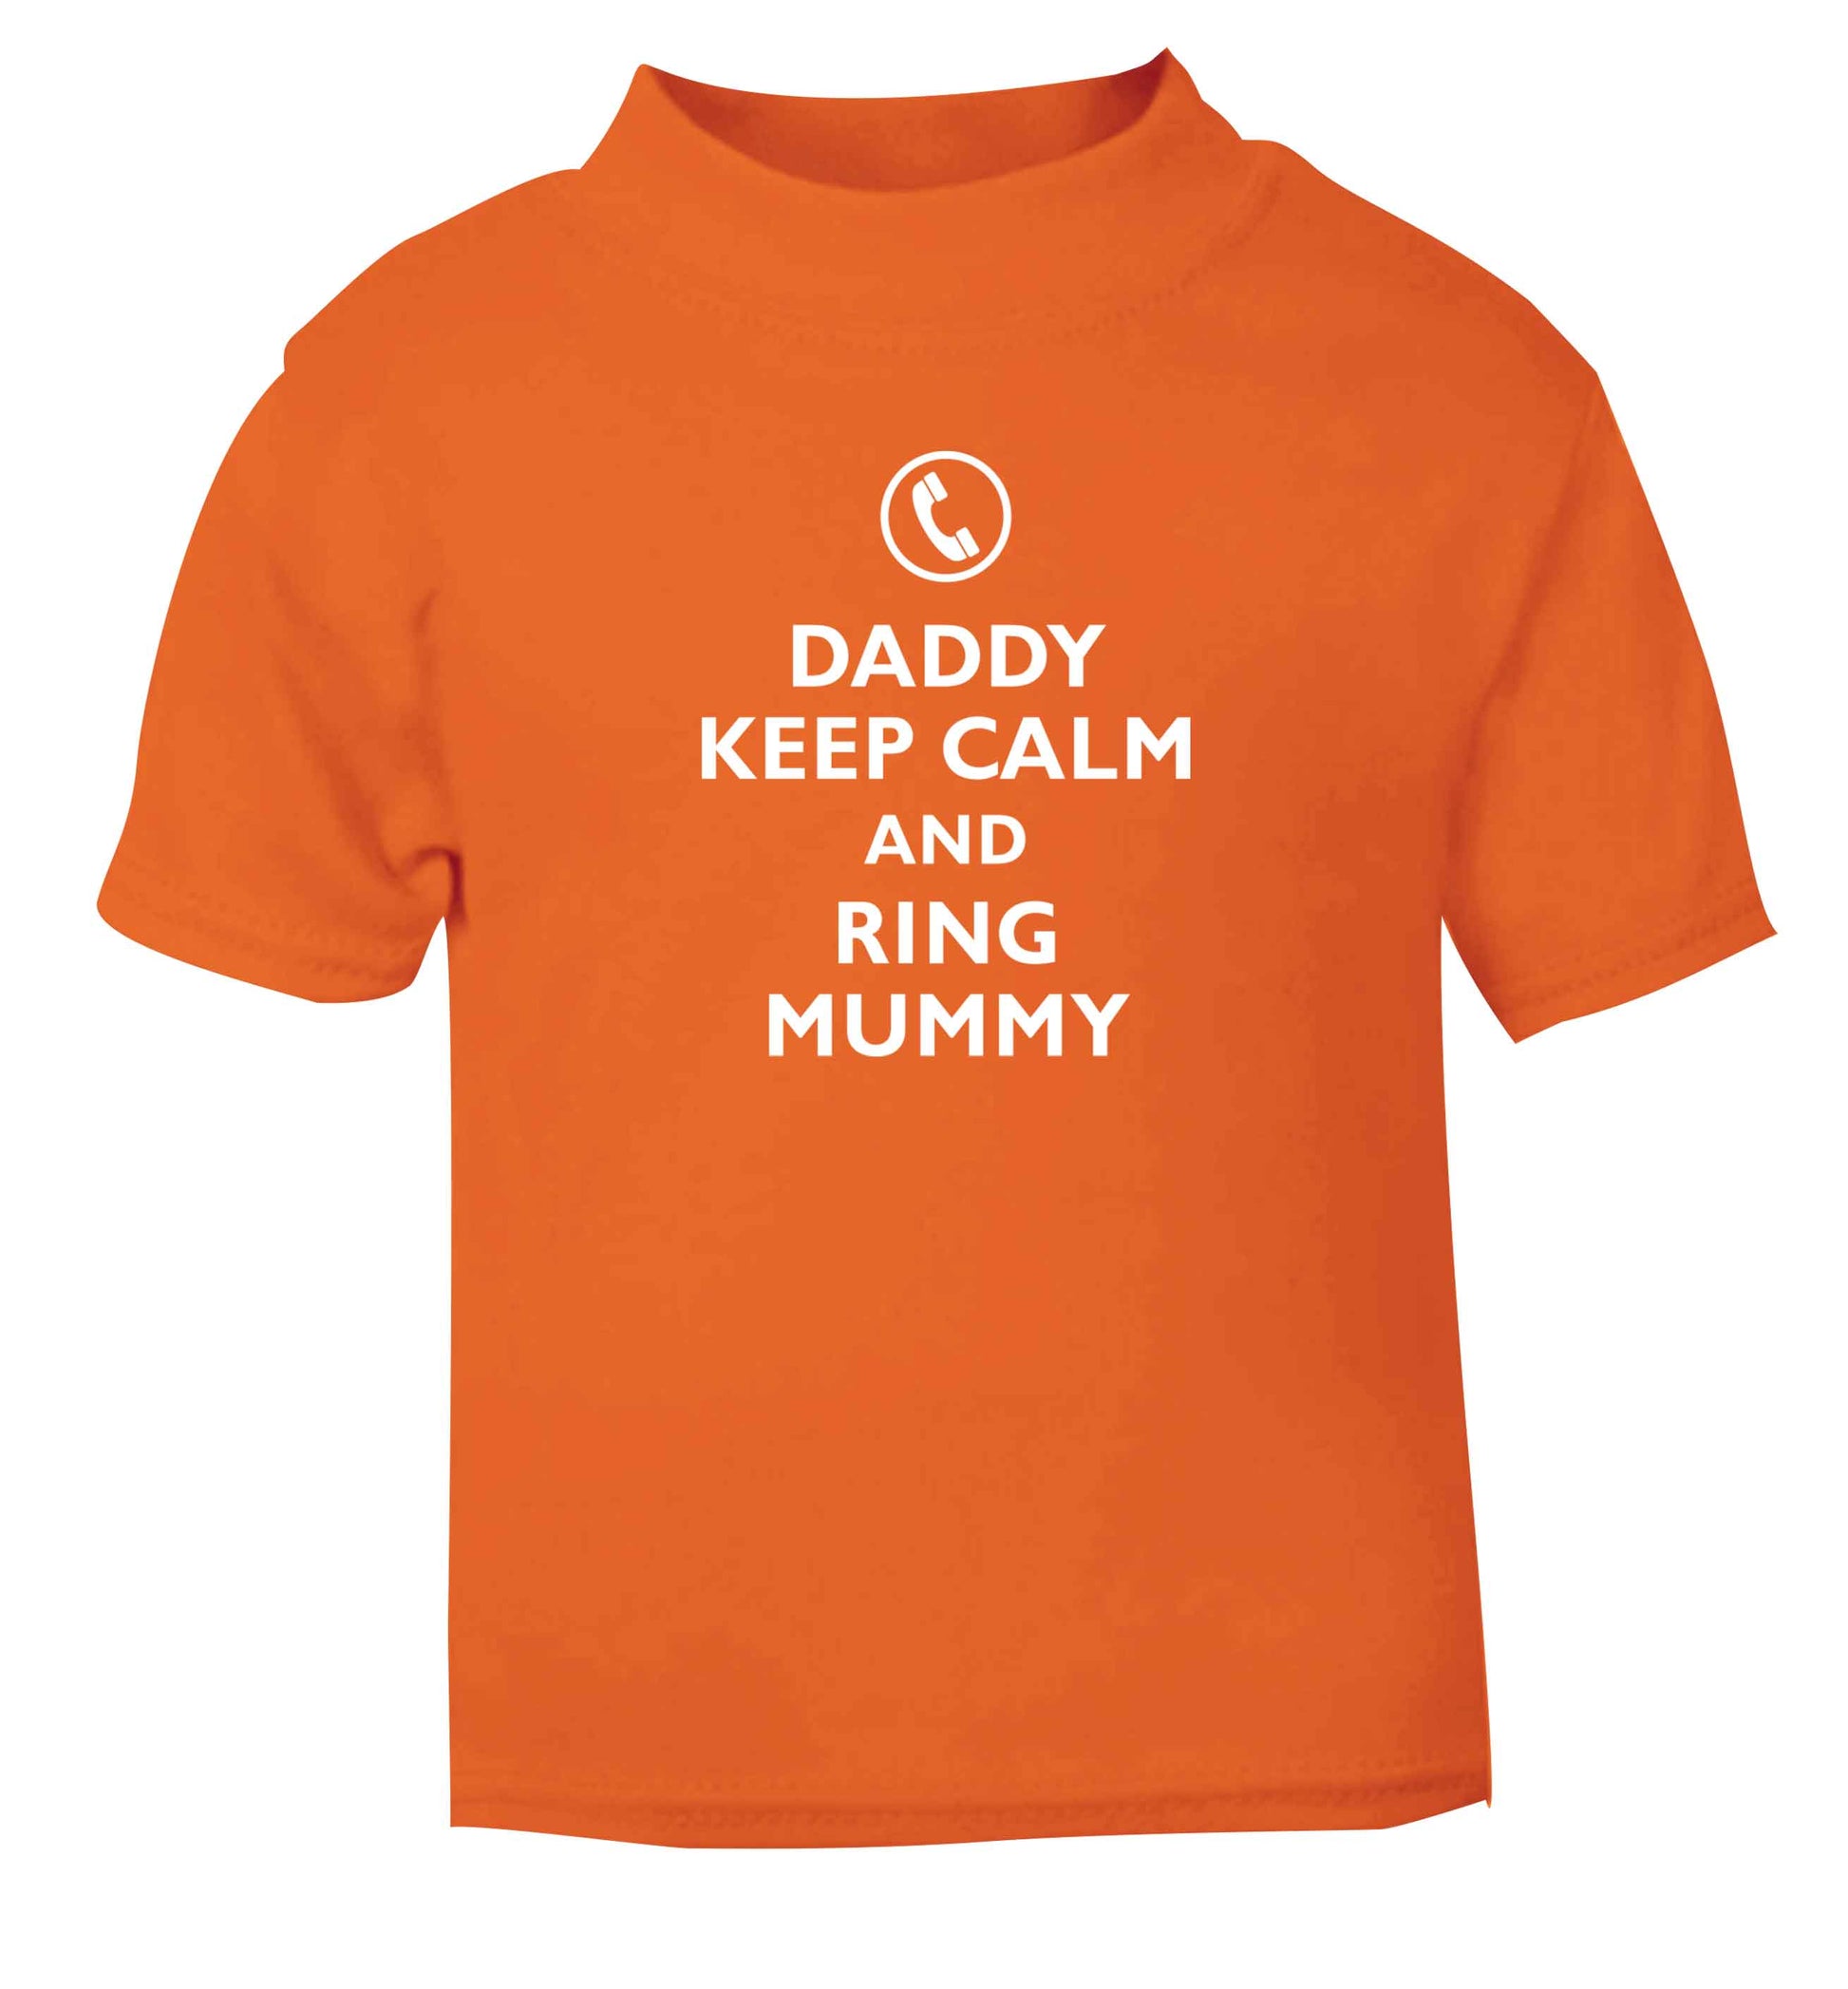 Daddy keep calm and ring mummy orange baby toddler Tshirt 2 Years